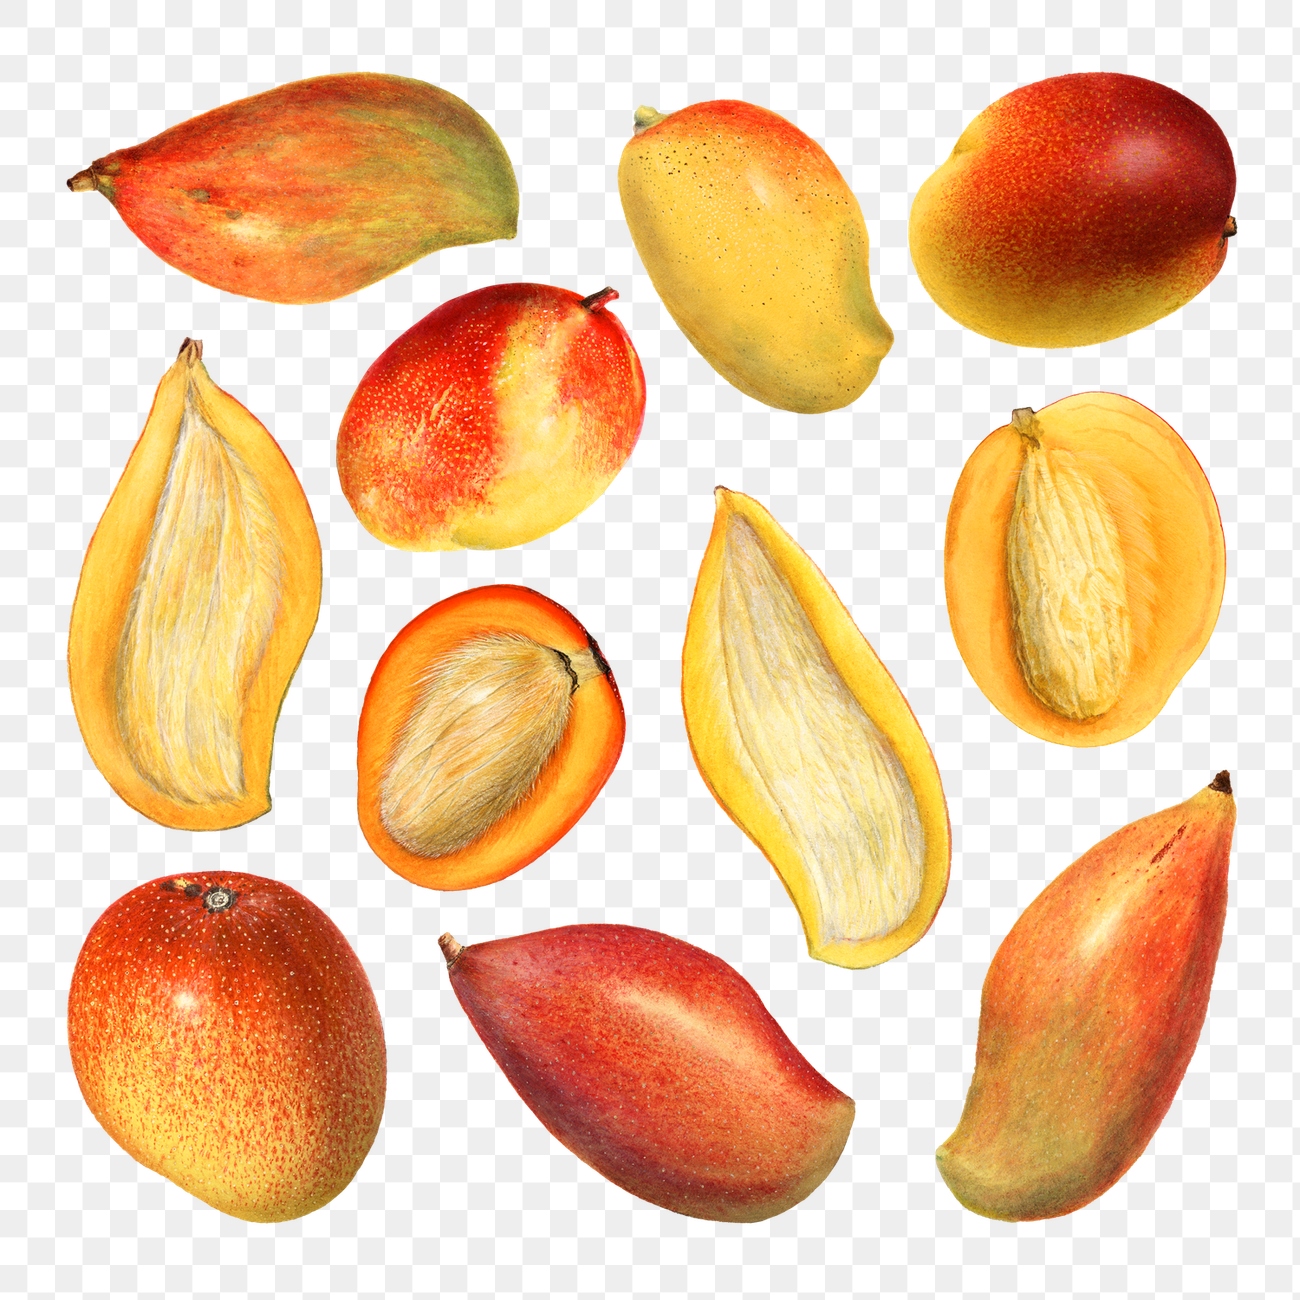 Mango species